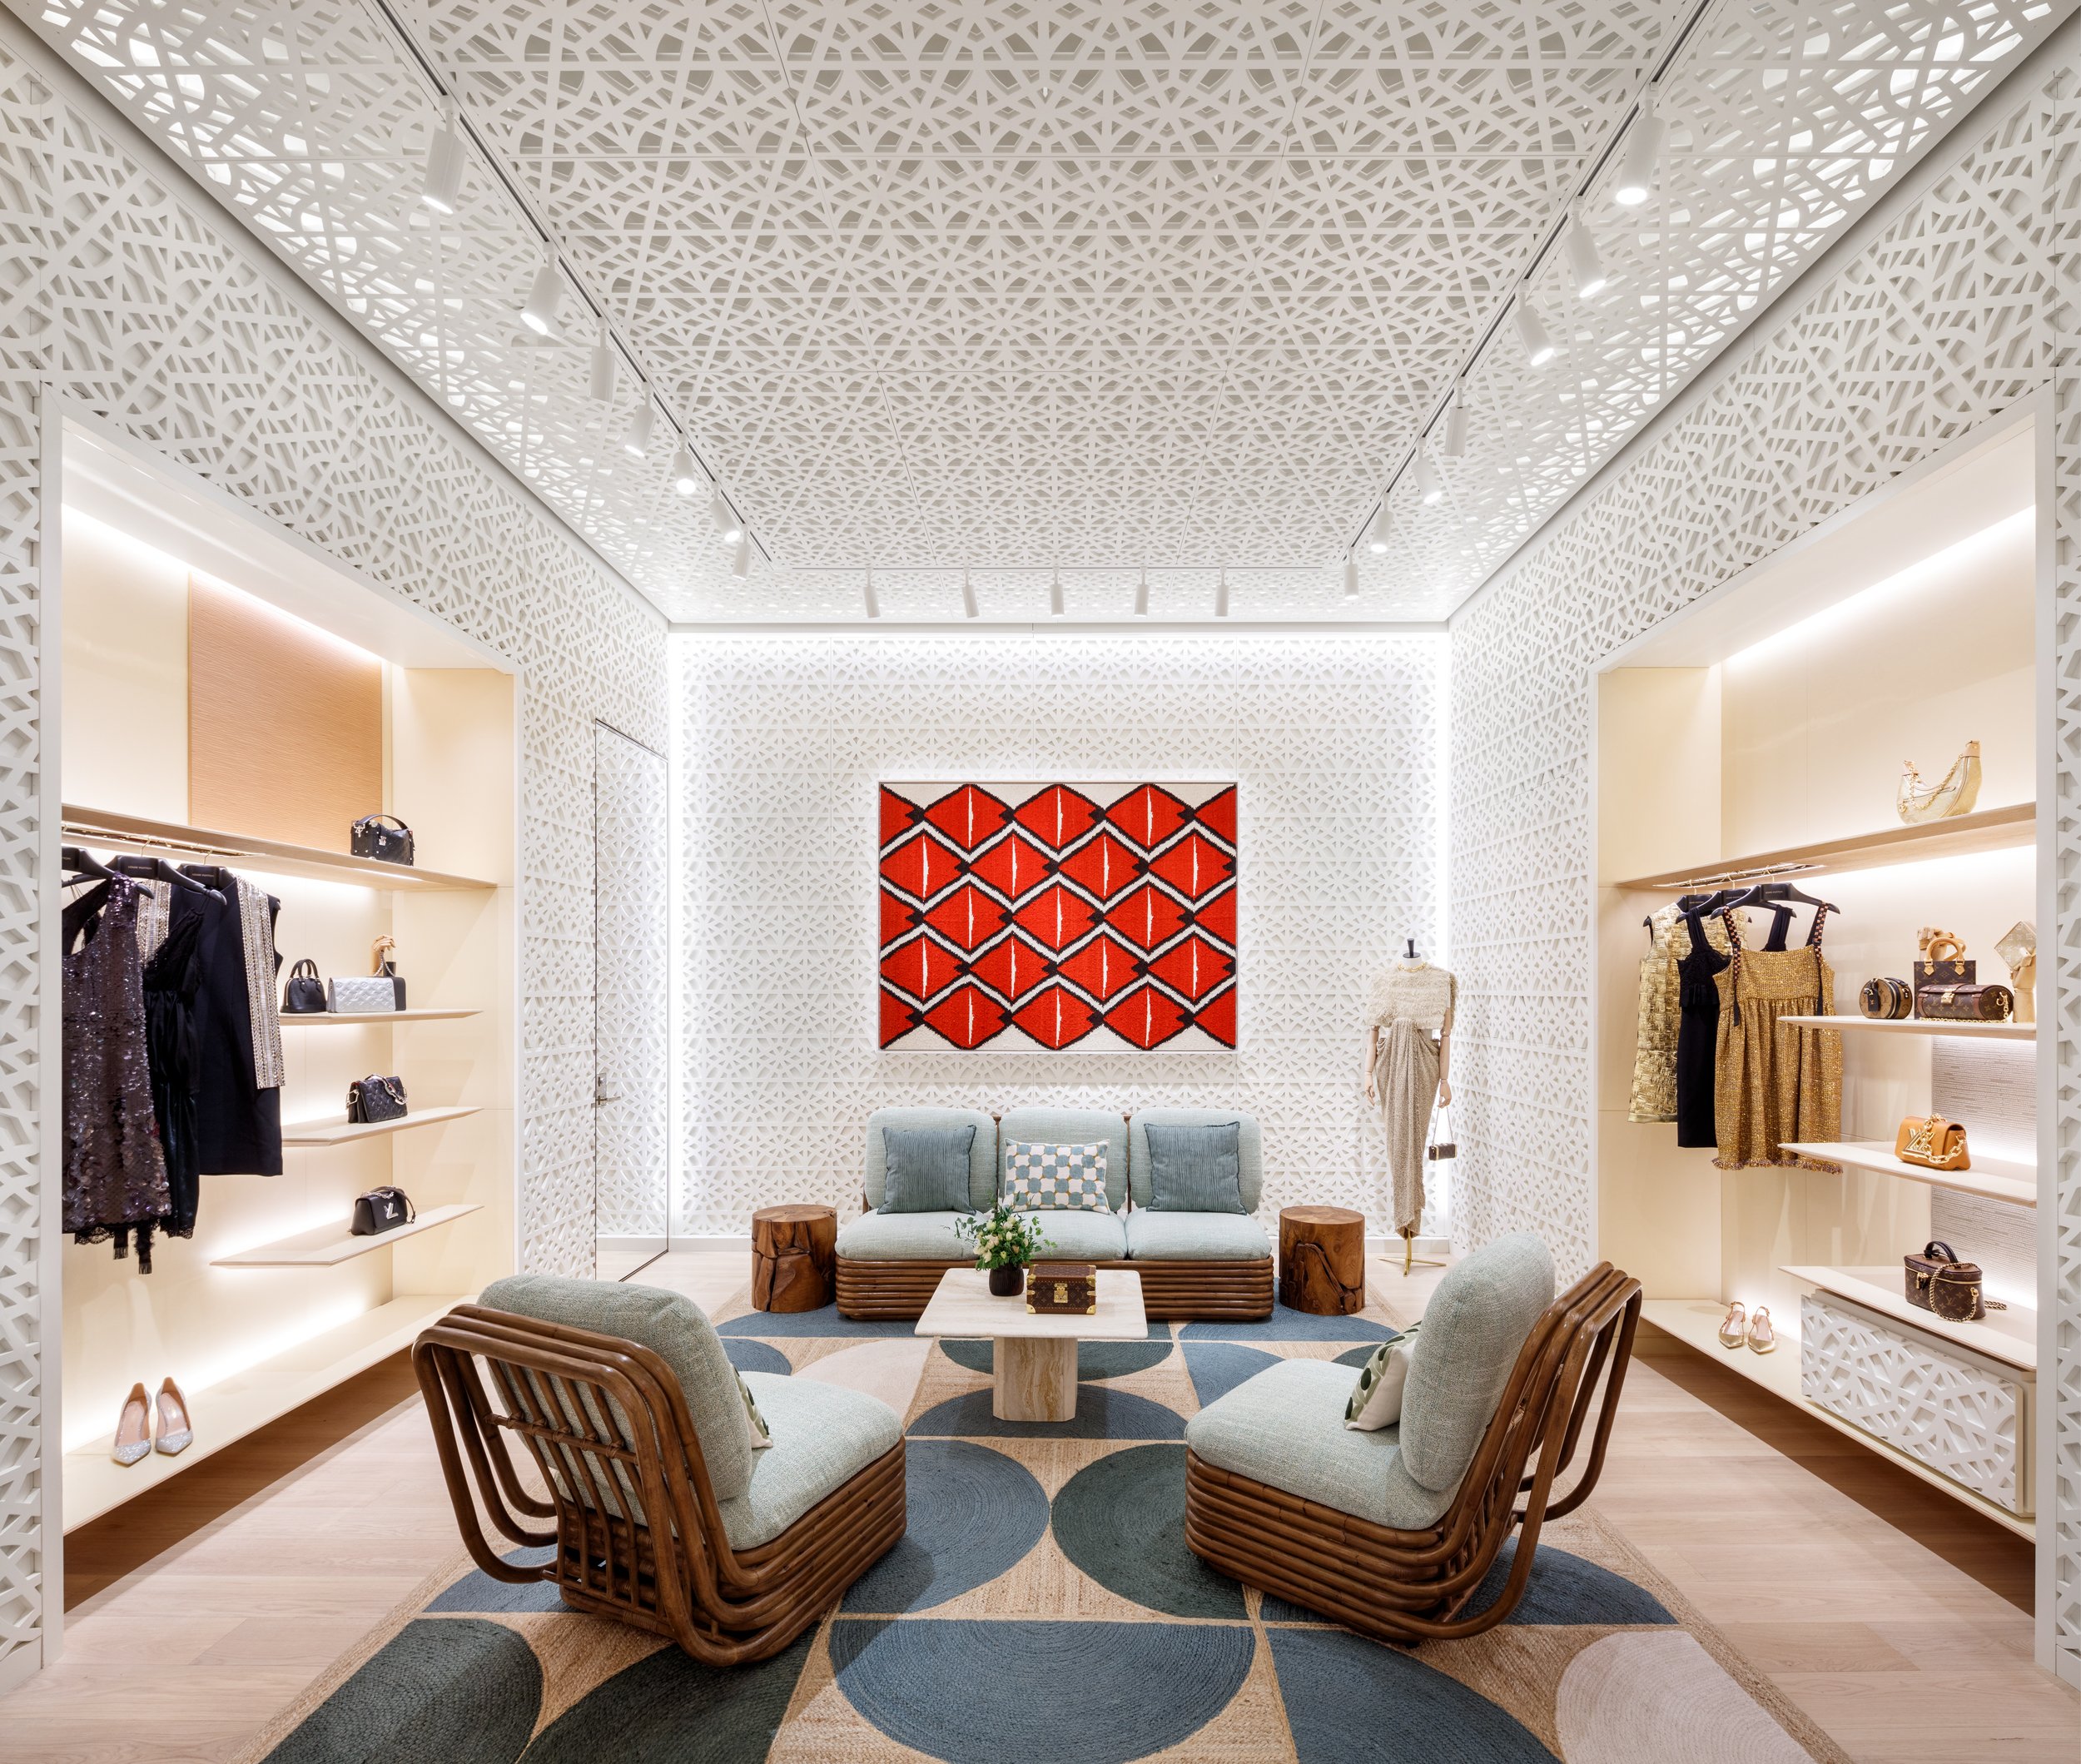 Louis Vuitton Miami Coral Gables store, United States